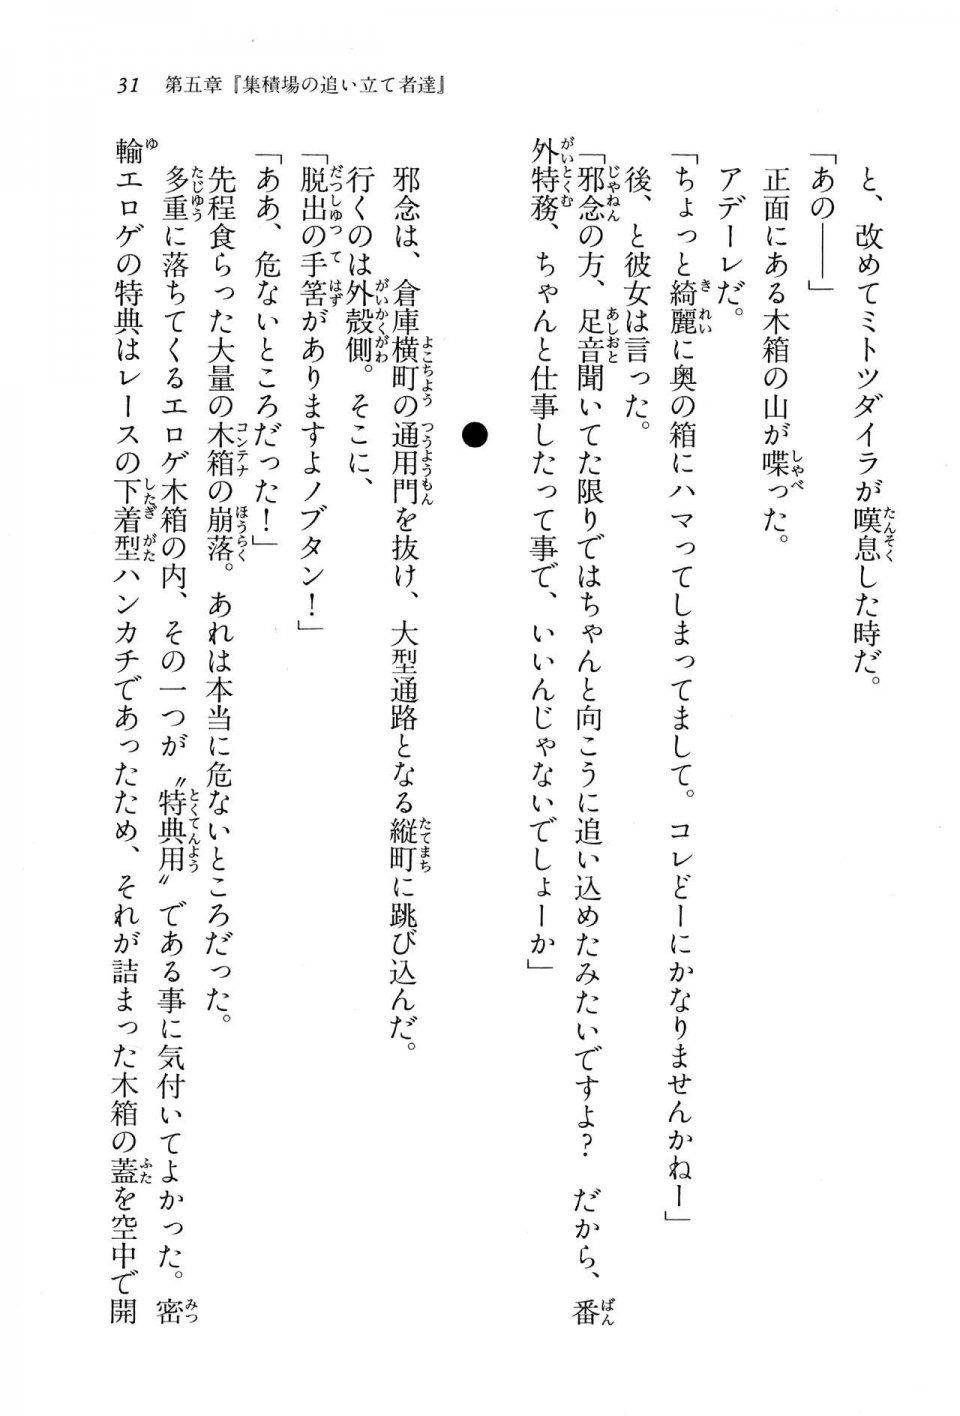 Kyoukai Senjou no Horizon BD Special Mininovel Vol 6(3B) - Photo #35